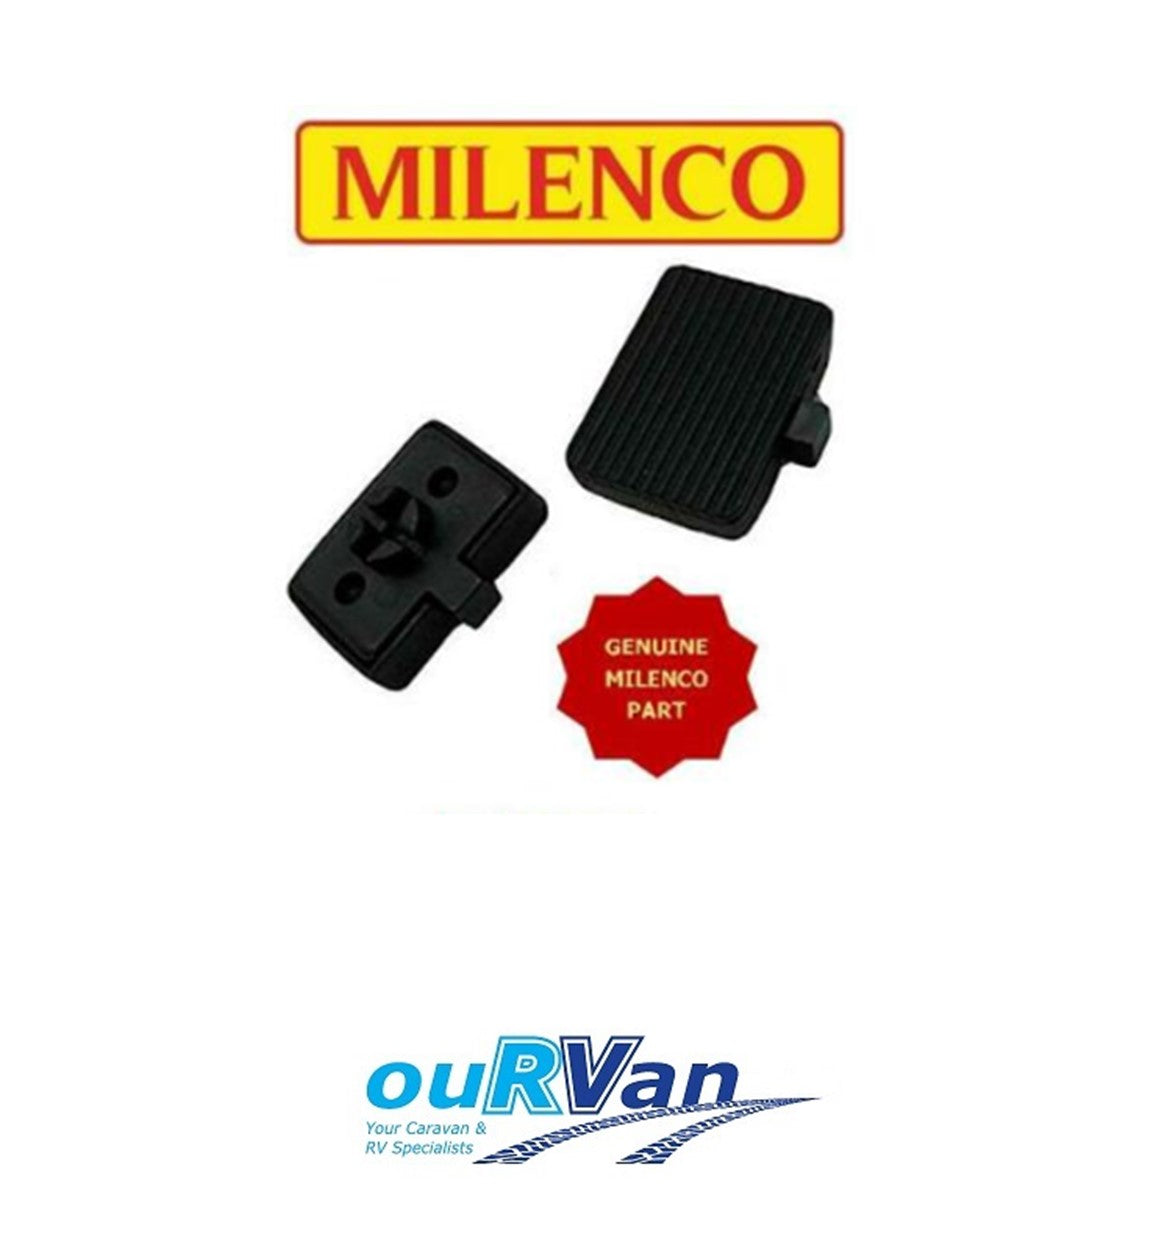 Pair Of Milenco Spare Pads For Aero Grand Aero And Falcon Mirrors